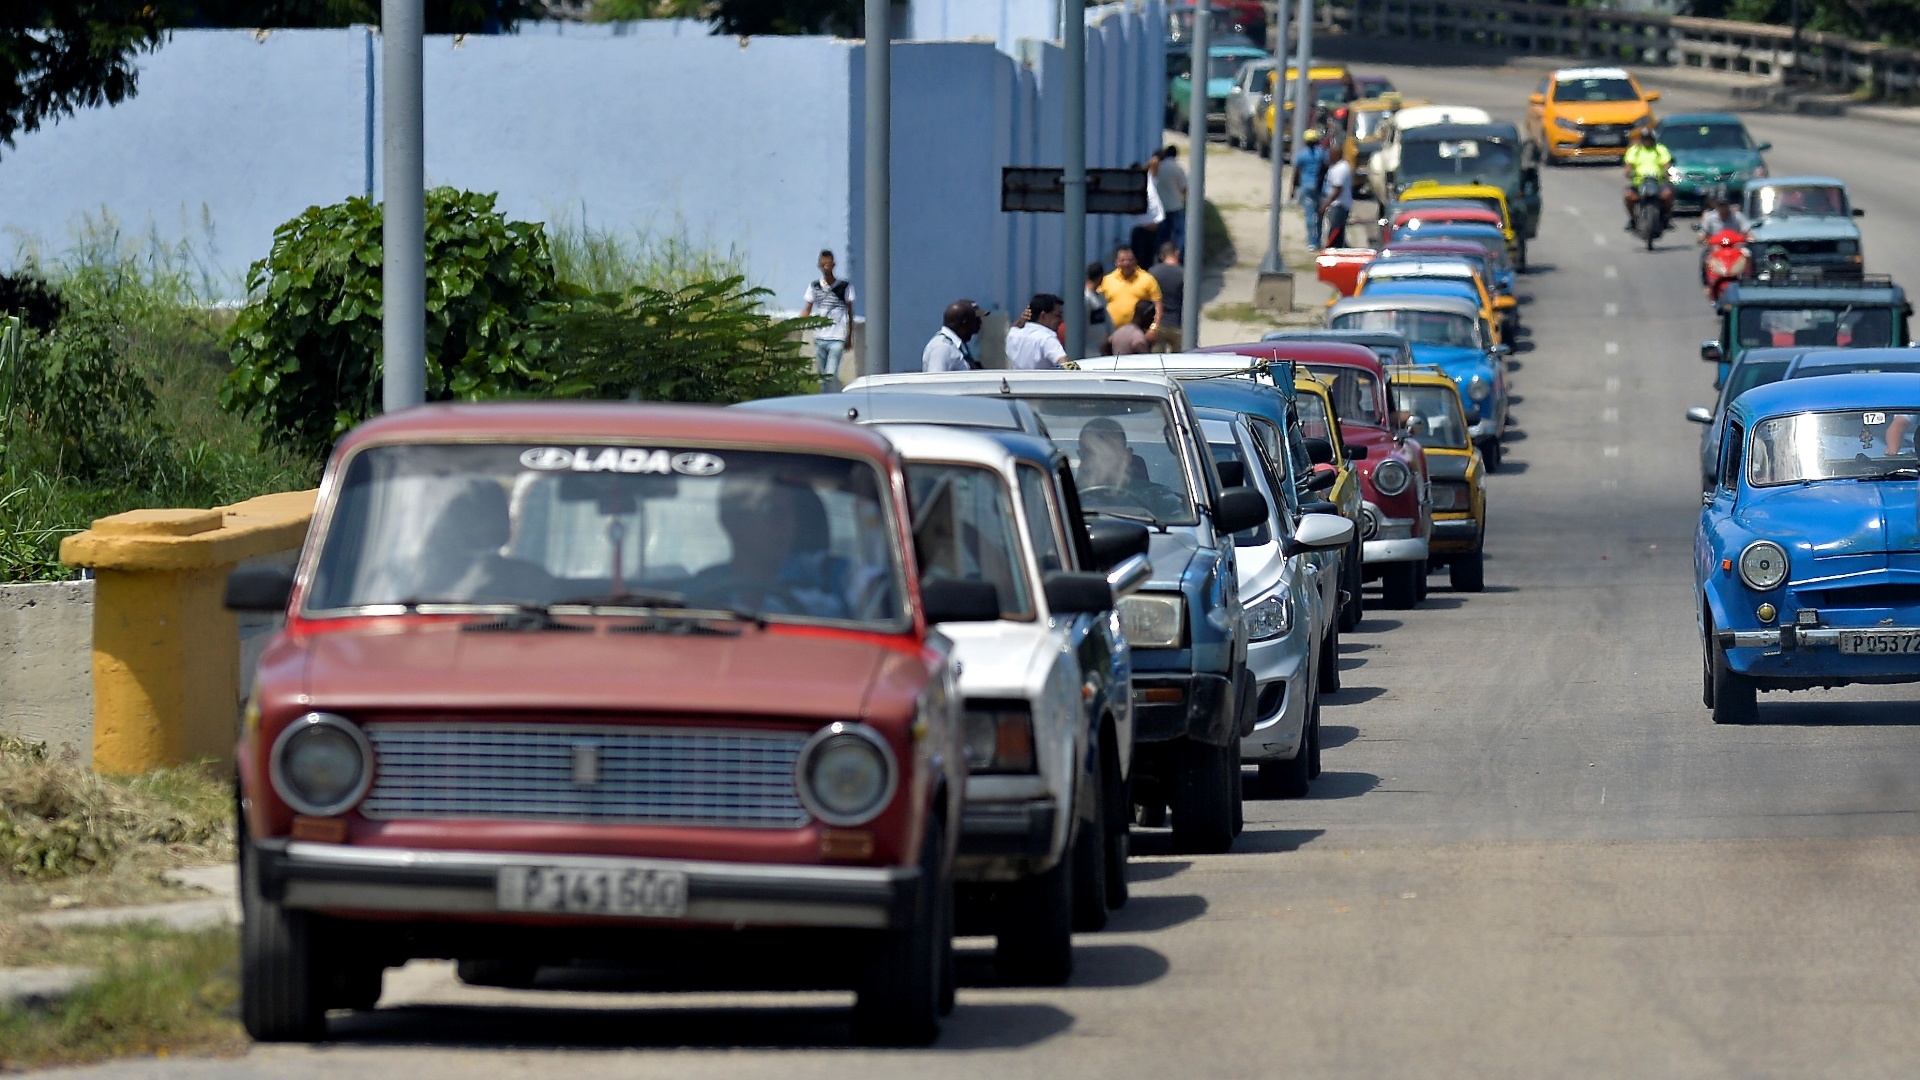 Кубинцы днями стоят за бензином, а власти не объясняют причину дефицита